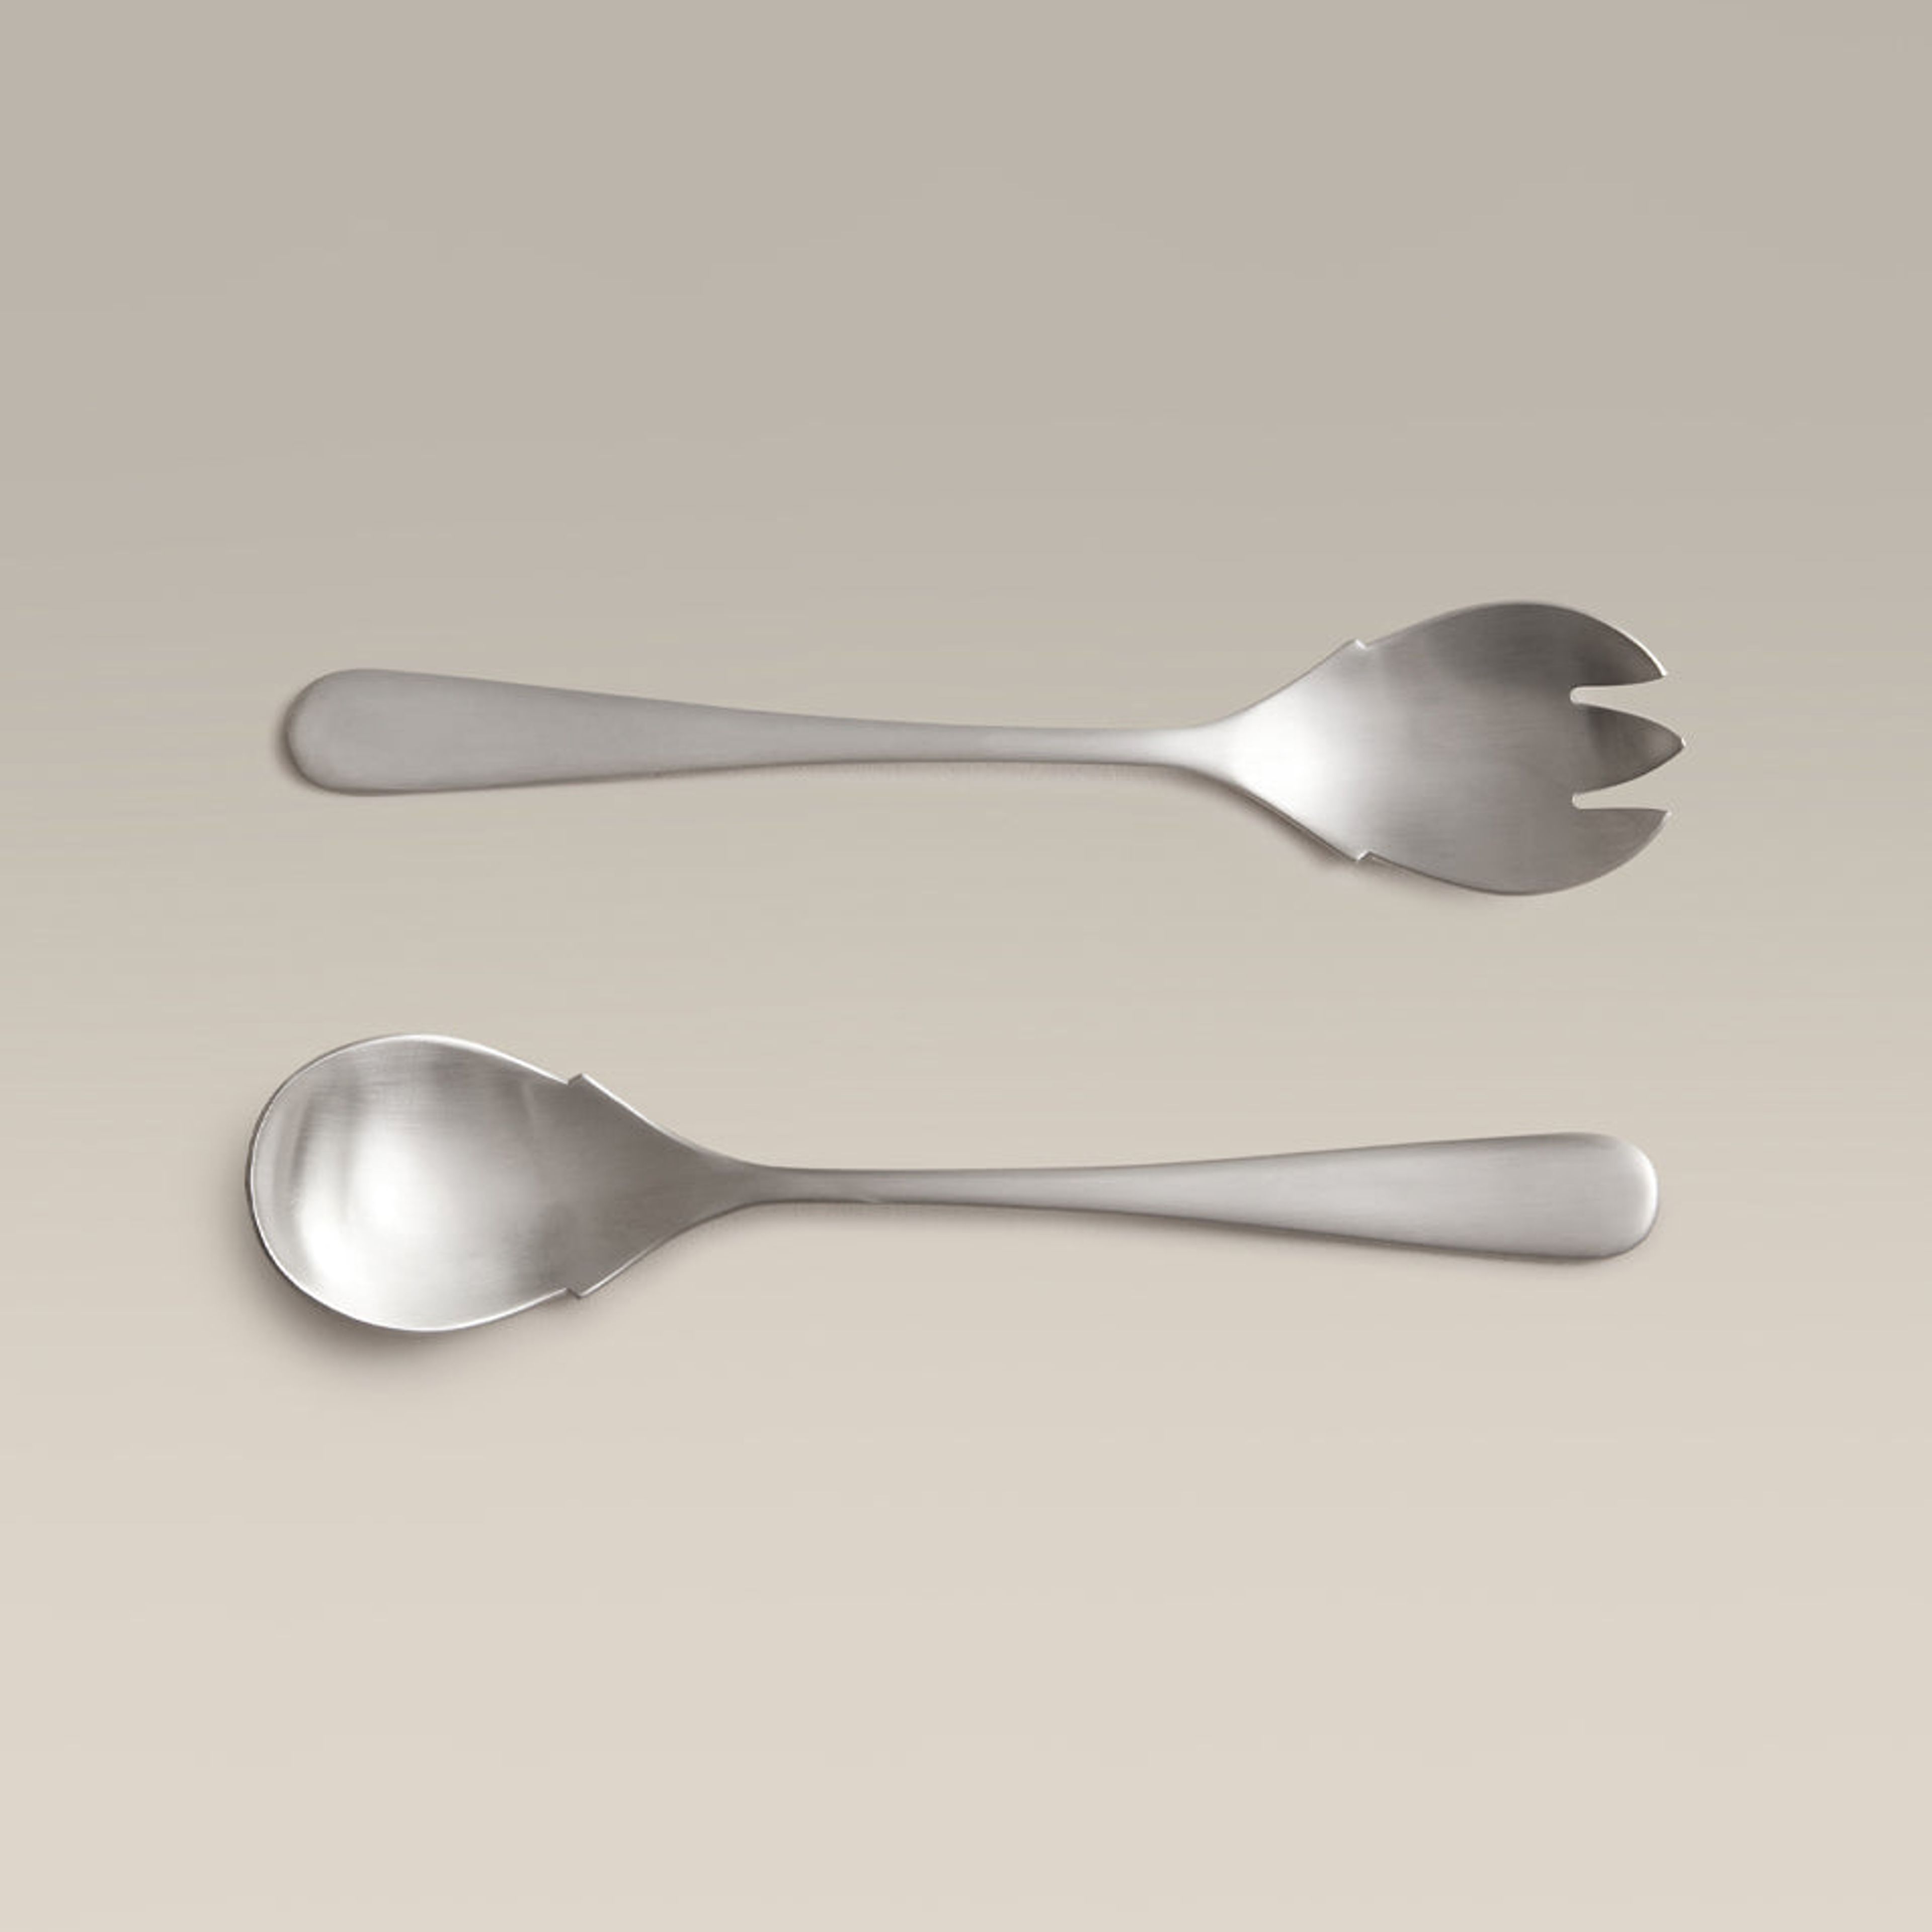 Serving Fork & Spoon